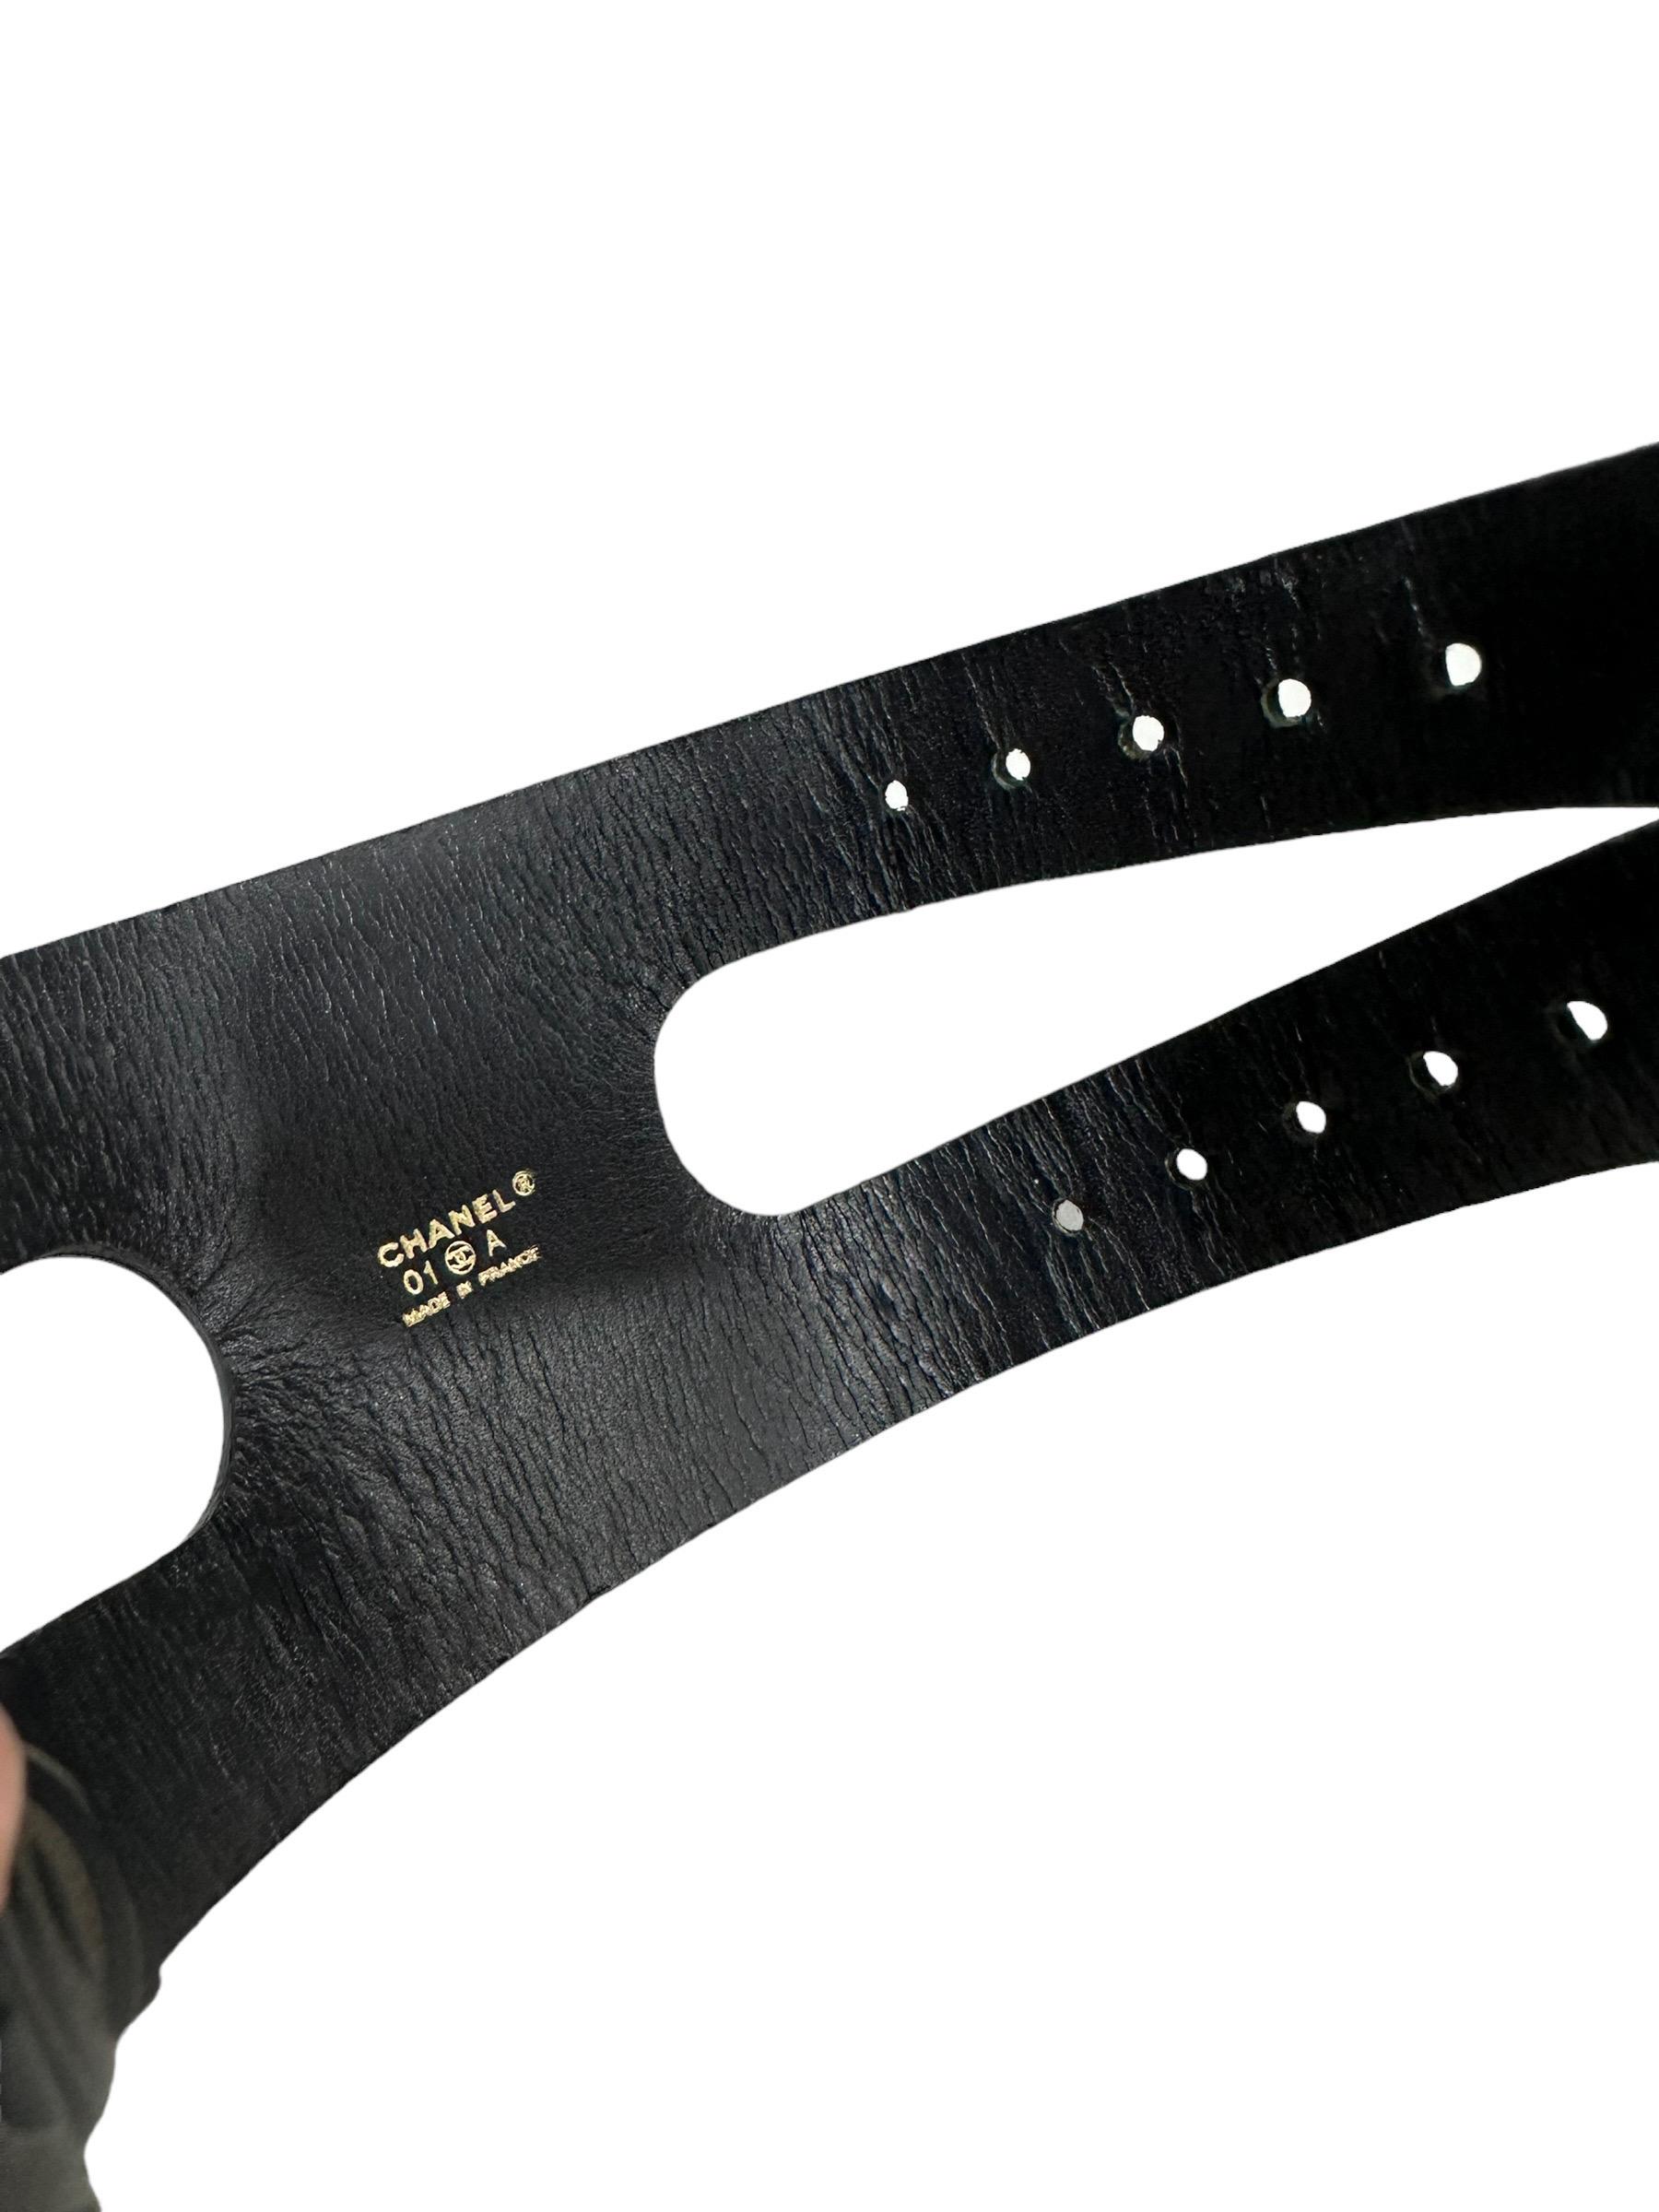 Chanel Bracelet Coco Print Black Leather For Sale 4